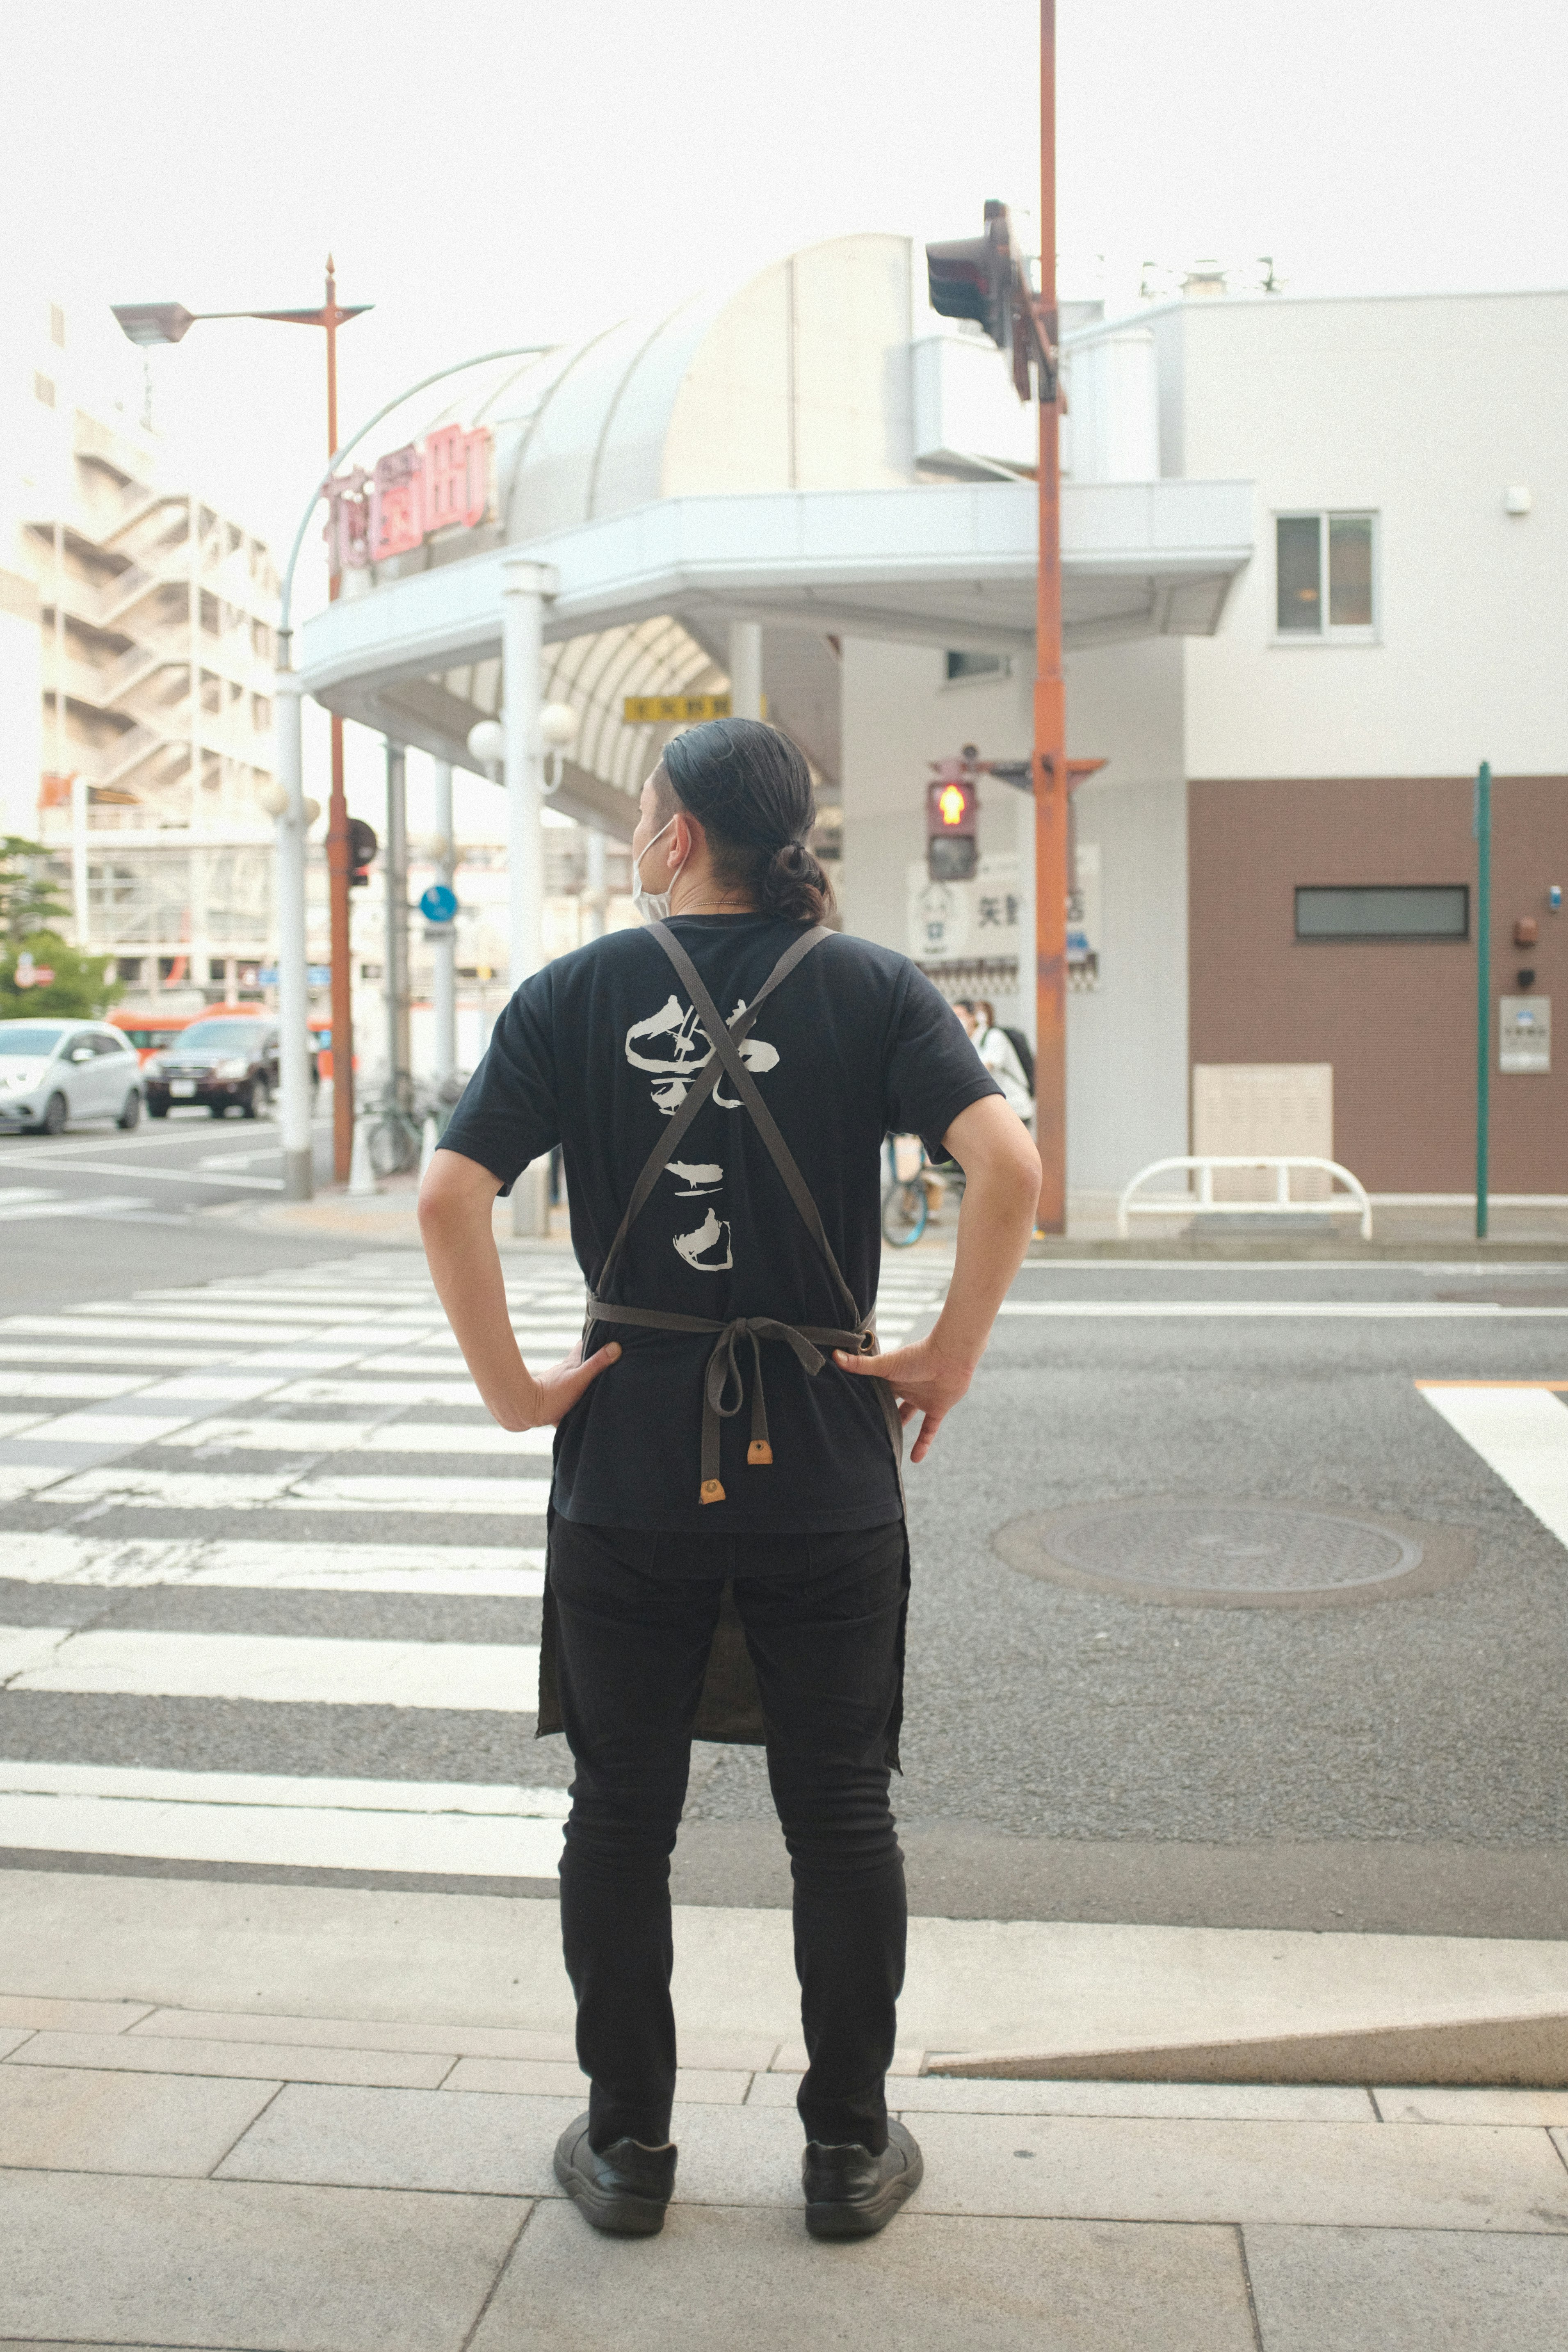 man in black t-shirt and black pants standing on pedestrian lane during daytime